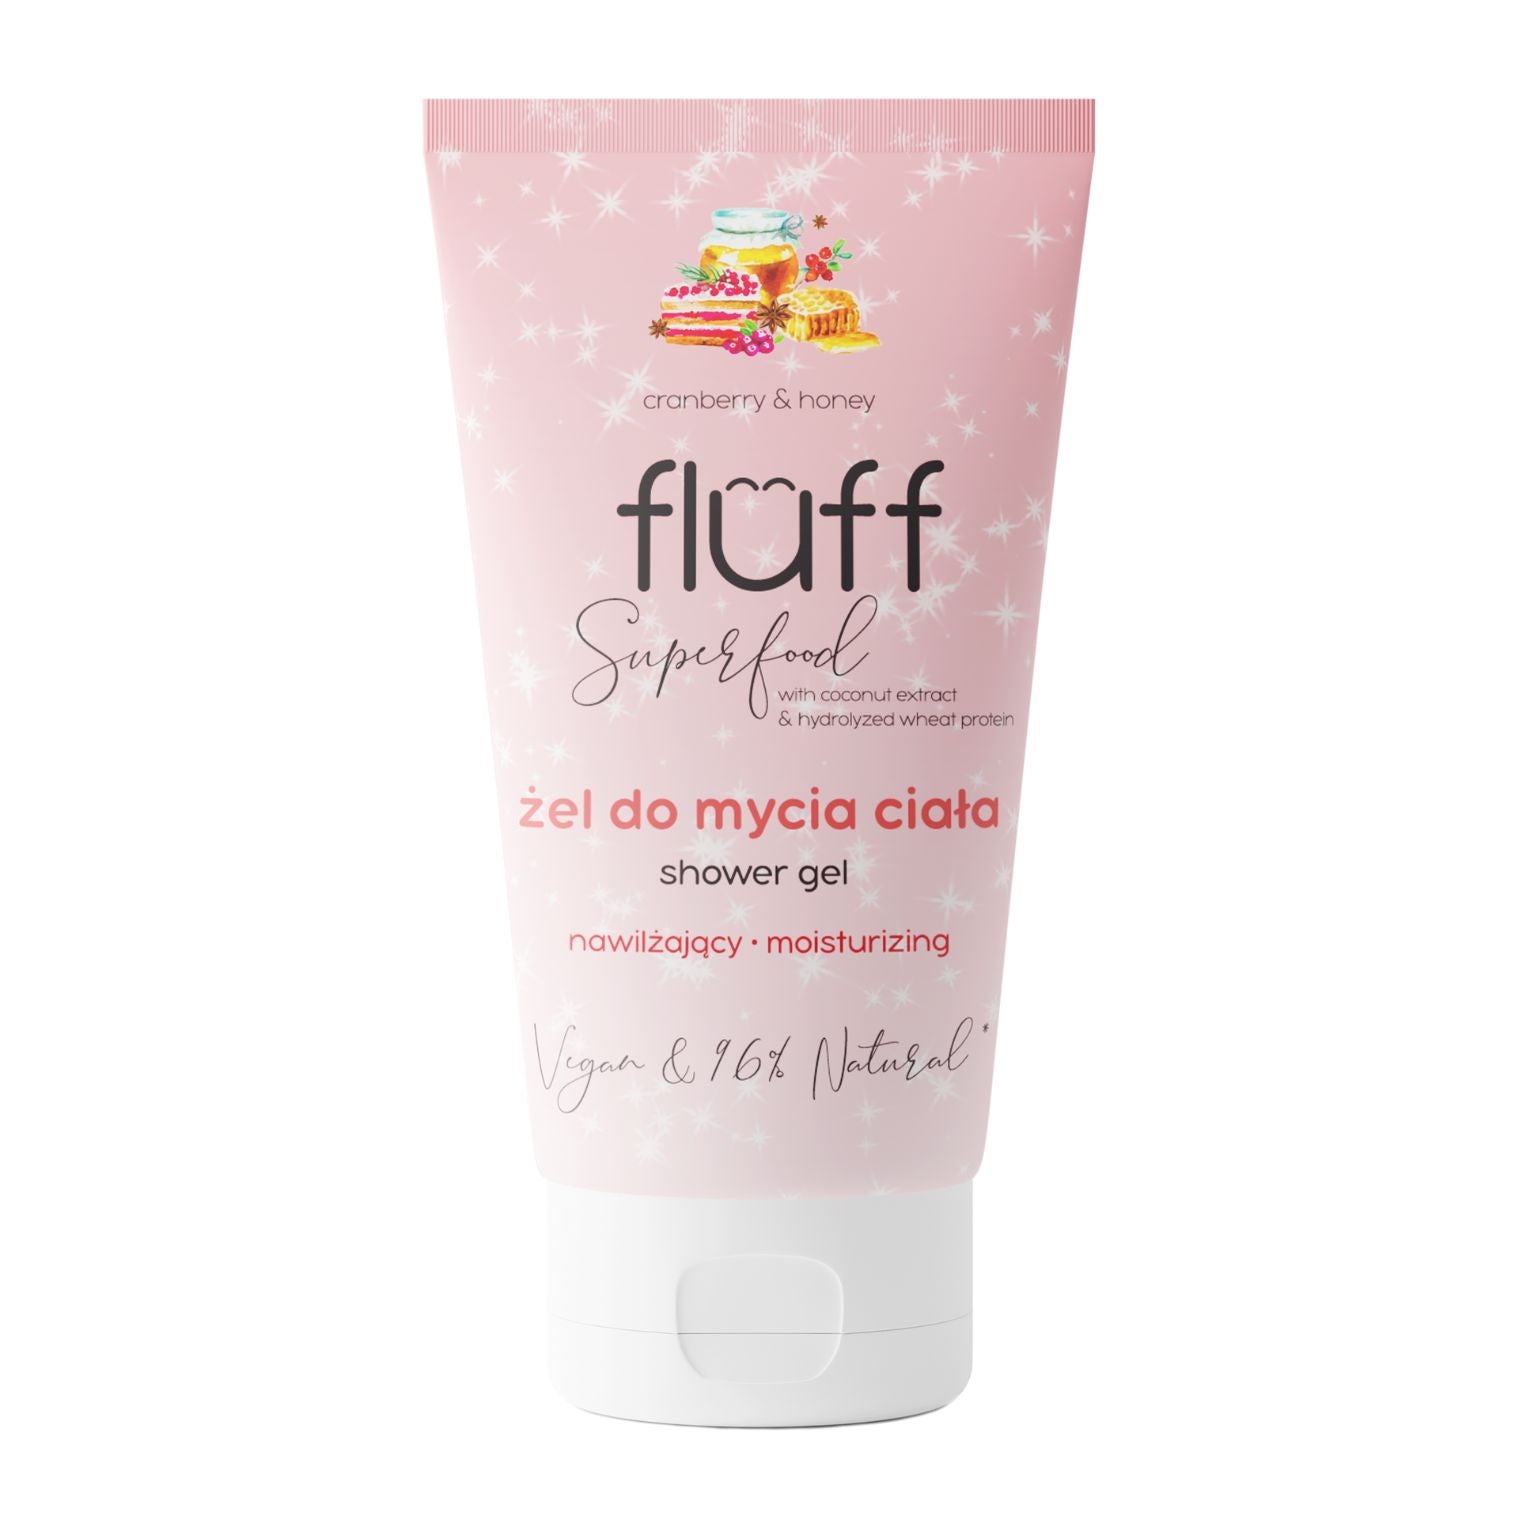 Fluff Festive Relax Limited Edition Shower Gel 150ml